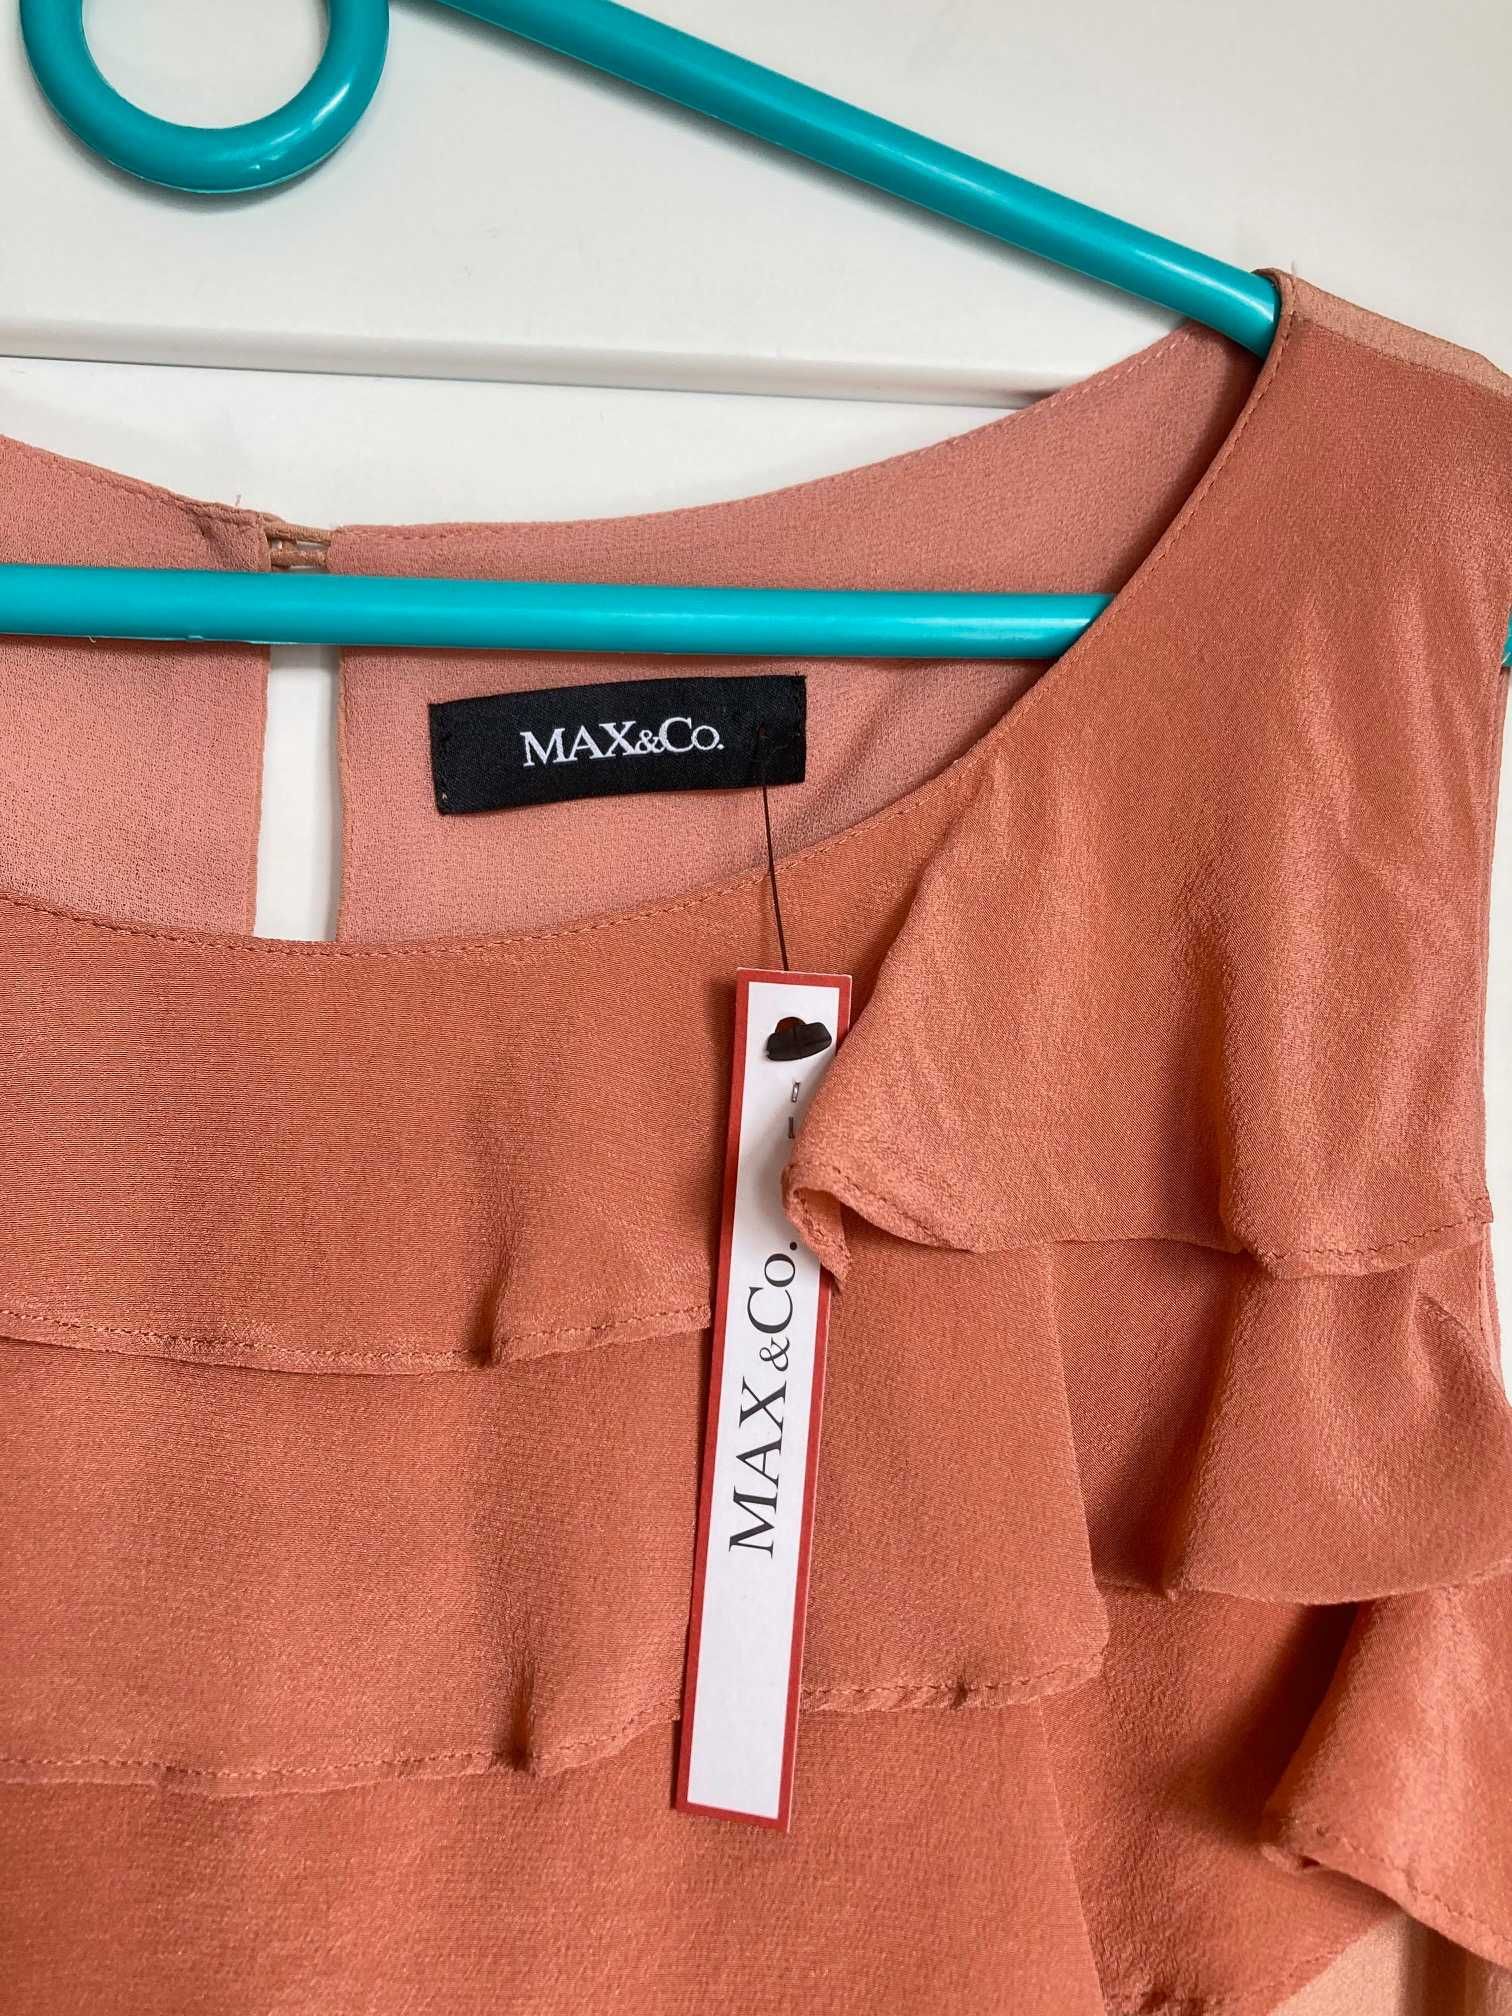 Nowa jedwabna luksusowa sukienka Max&Co. Max Mara pudrowy róż